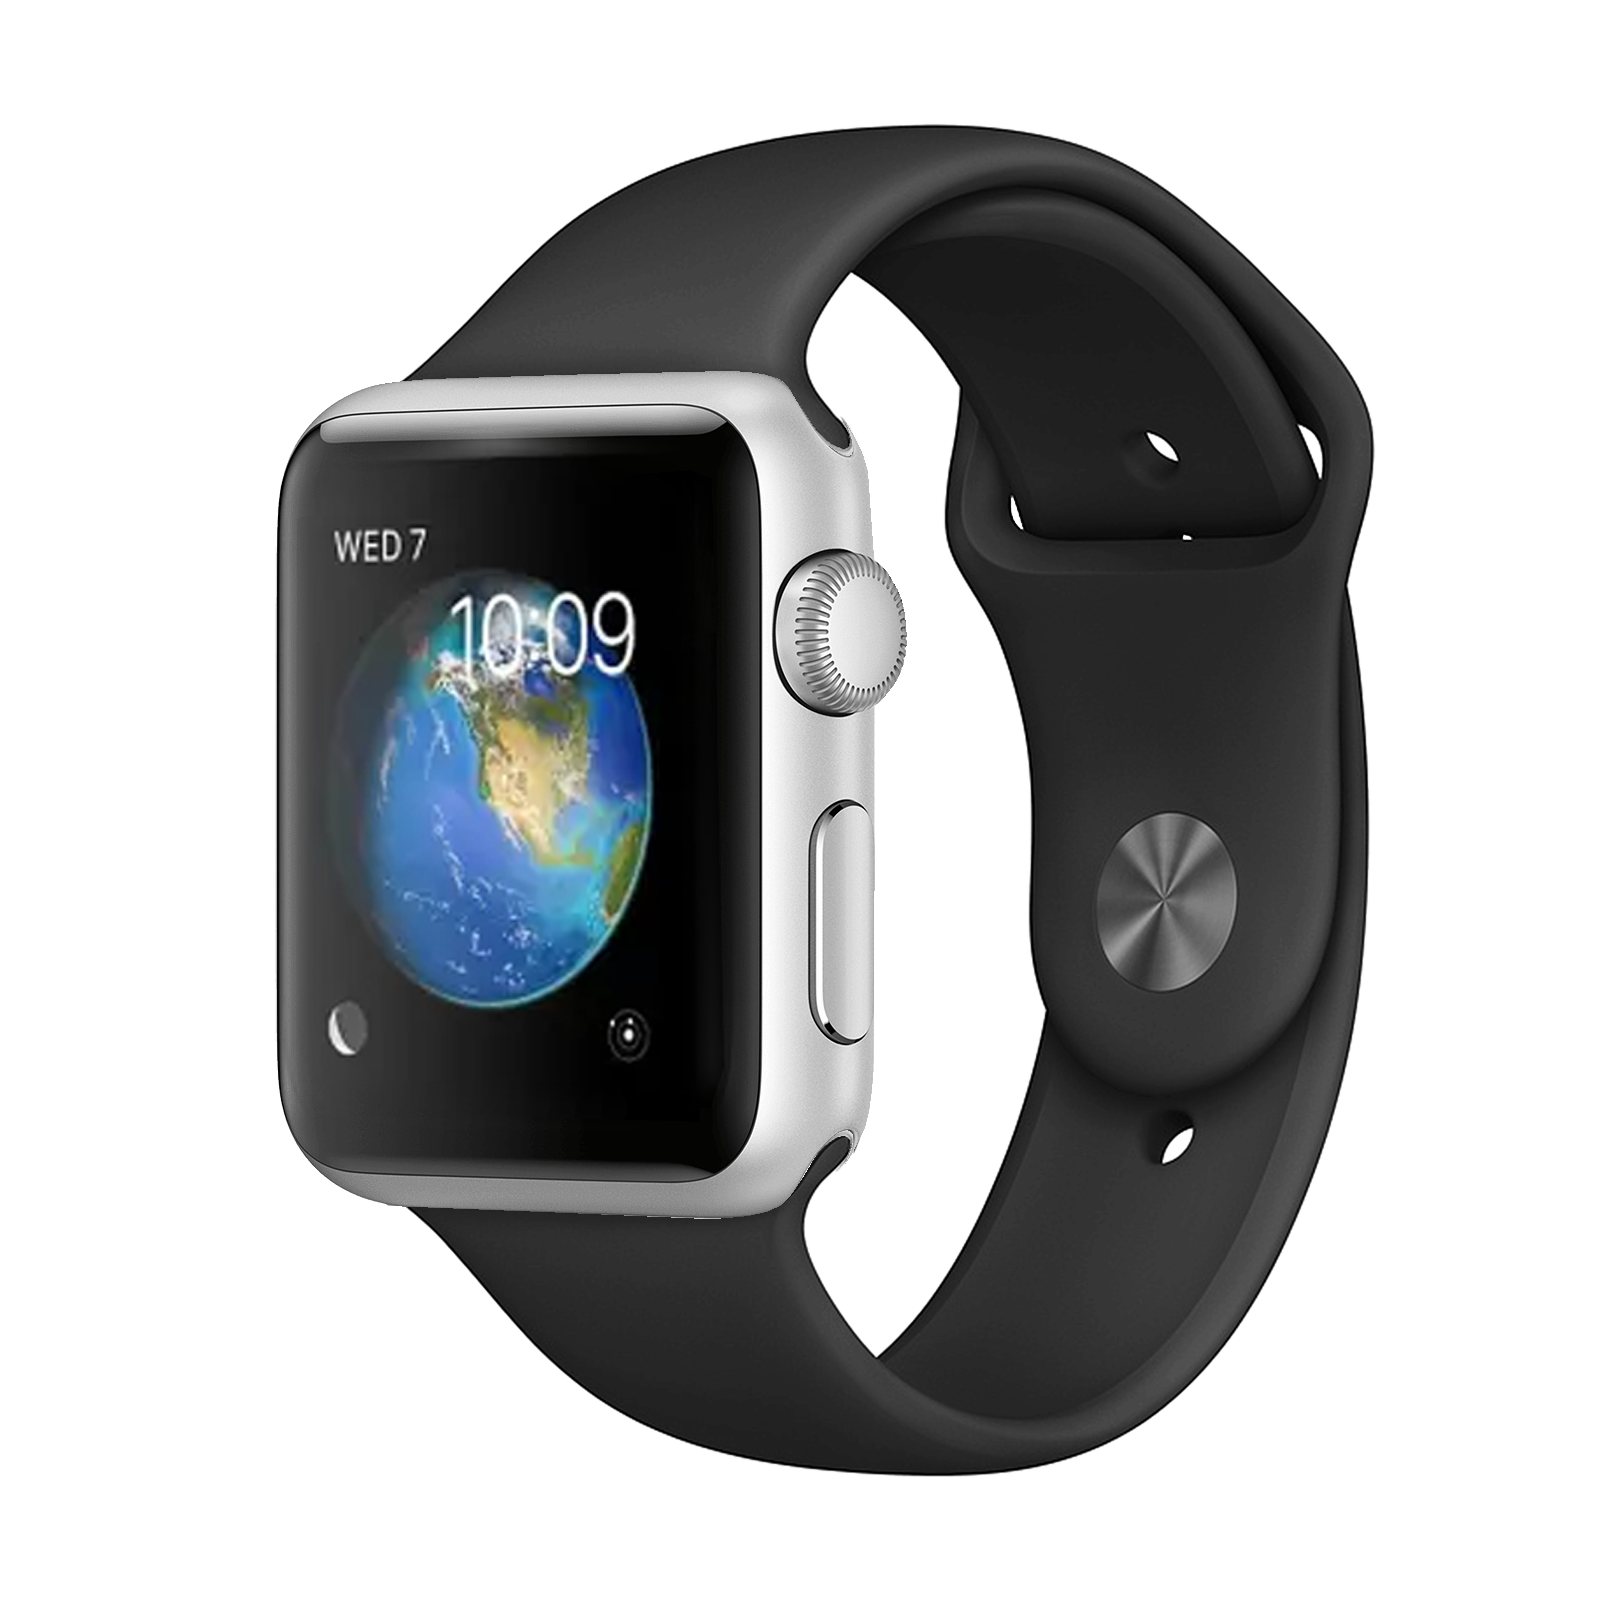 Apple Watch Series 2 Stainless 42mm Steel - Pristine - WiFi